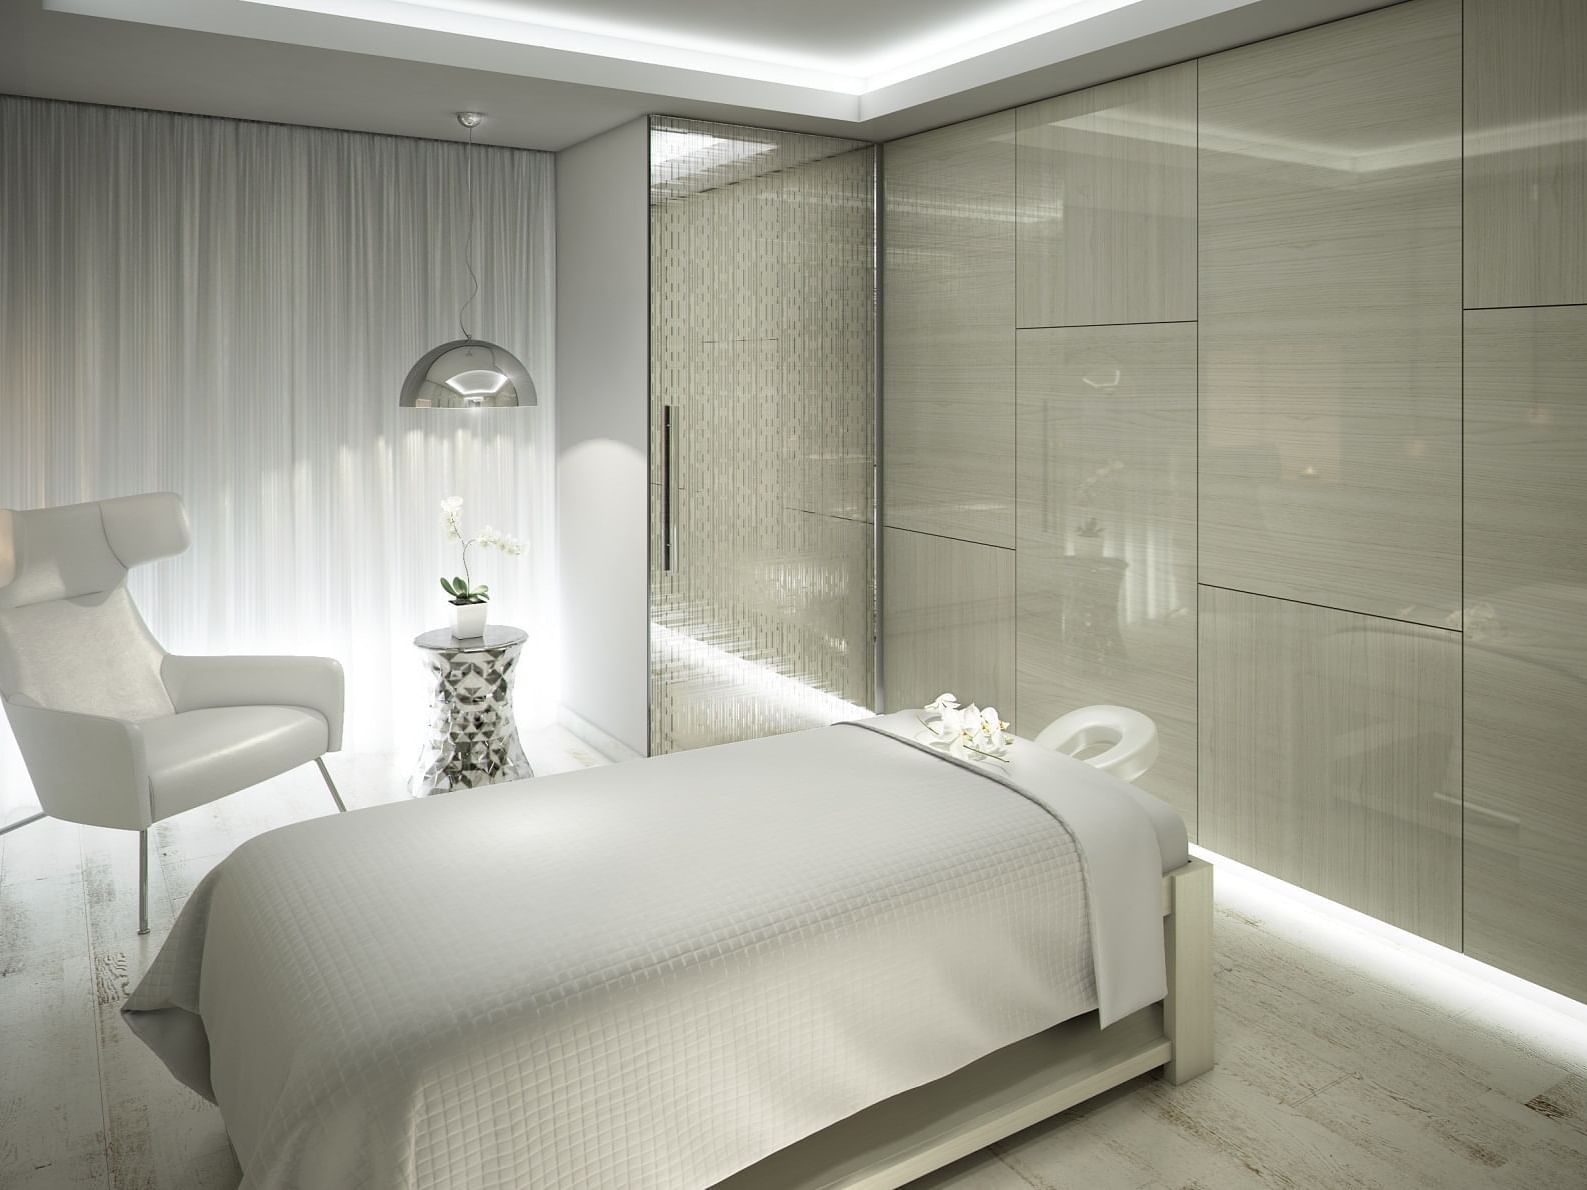 Pause Spa Treatment Room at Paramount Hotel Dubai